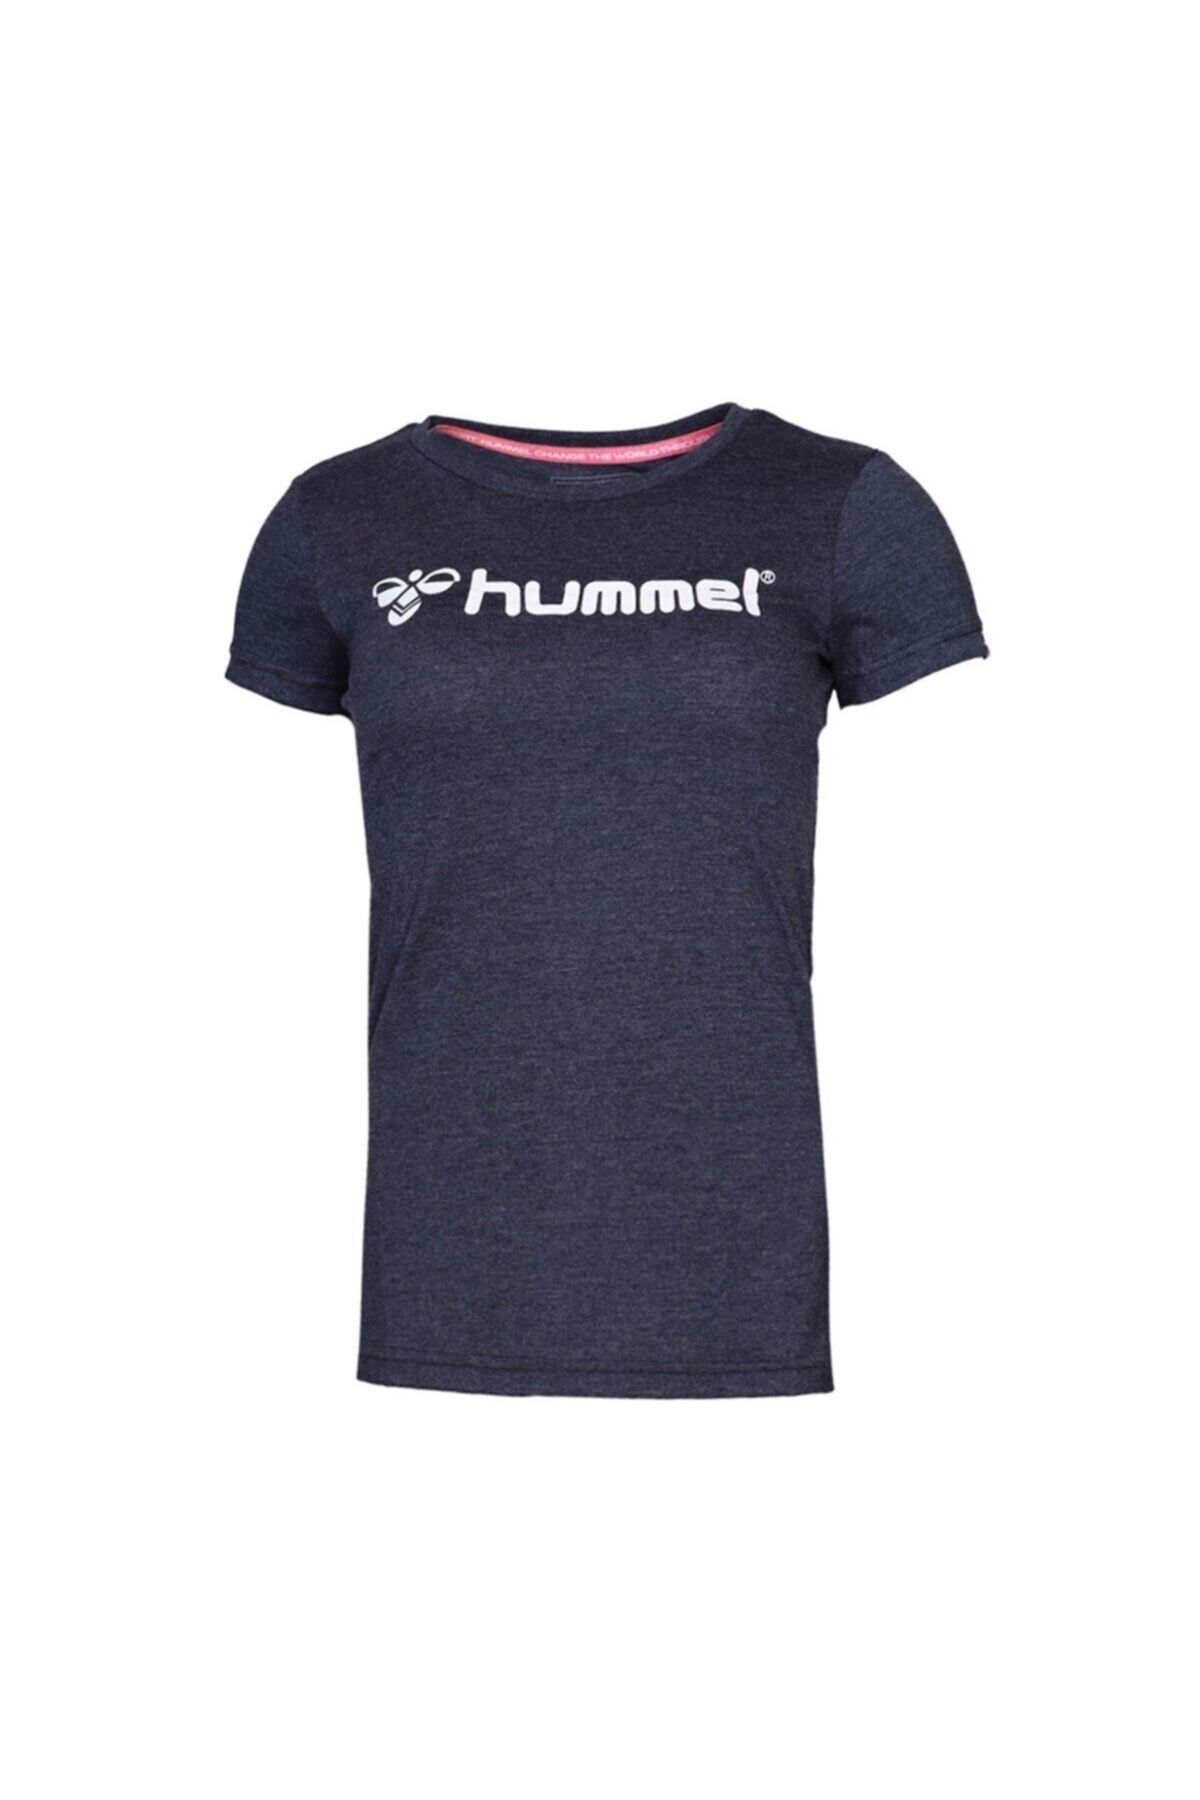 hummel HMLMARIHU T-SHIRT S/S Lacivert Kadın T-Shirt 100580769